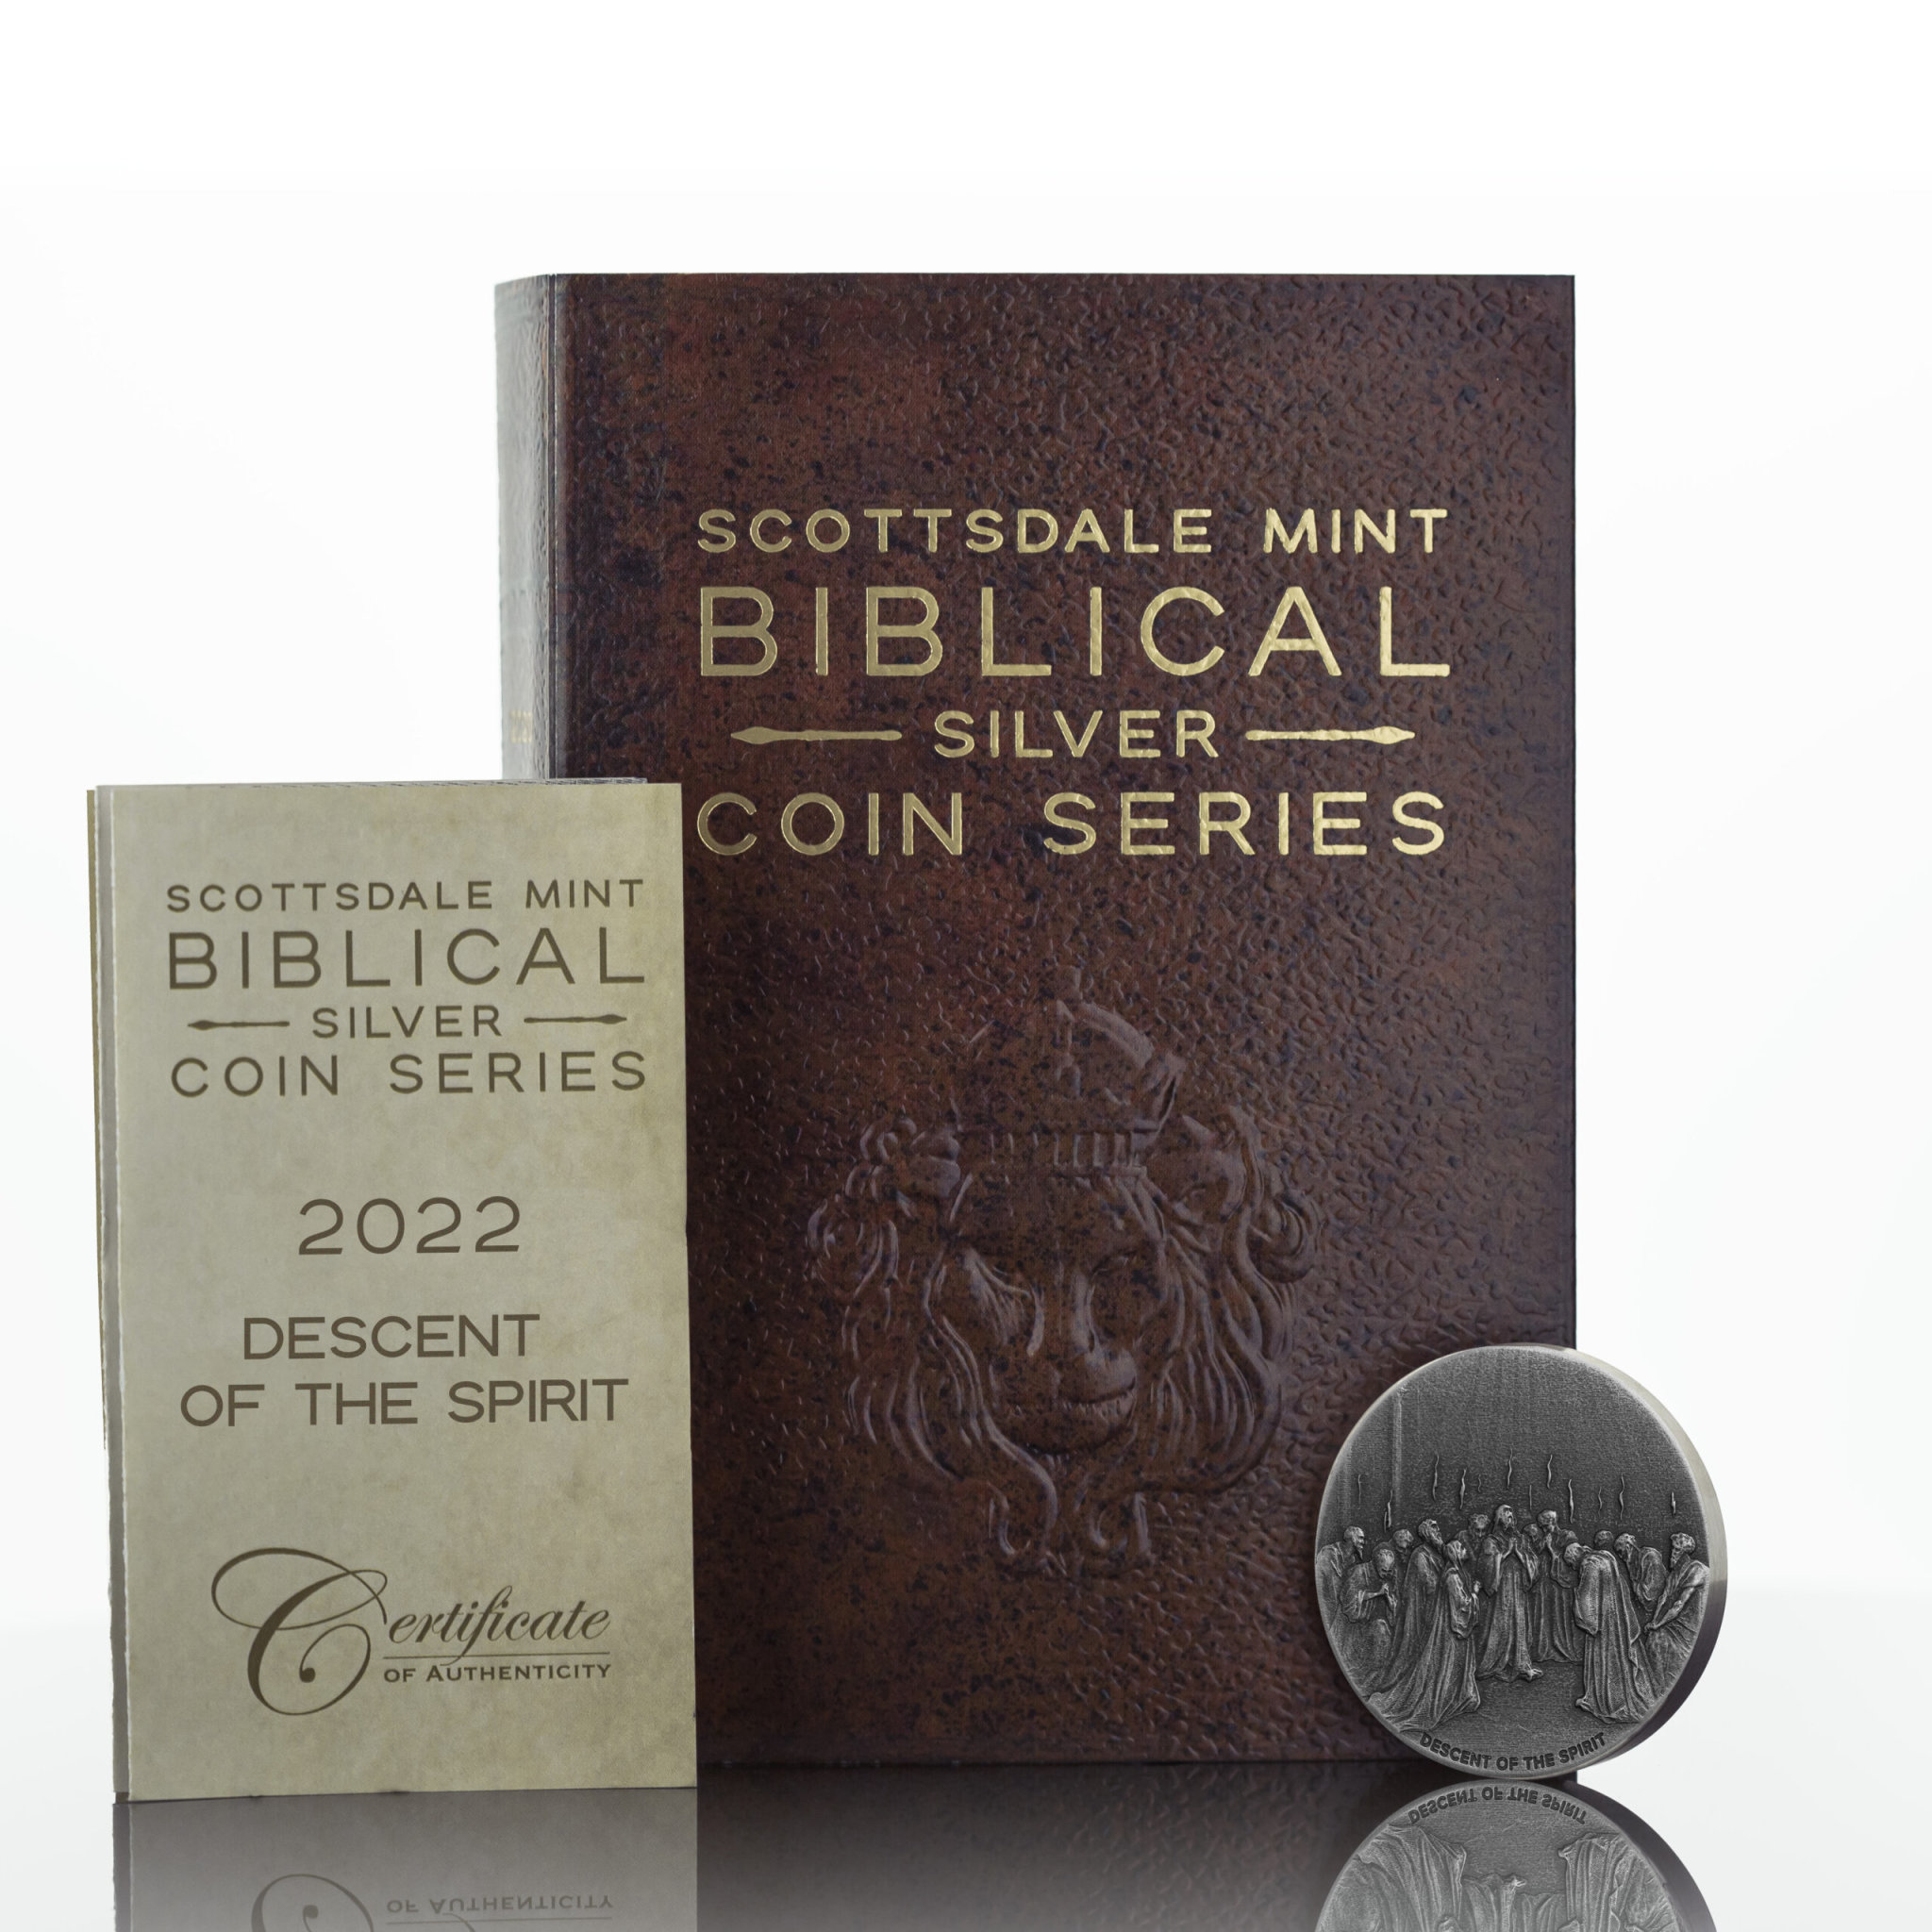 SCOTTSDALE MINT SCOTTSDALE MINT BIBLICAL SERIES COIN, DESCENT OF THE SPIRIT, 2022, SILVER, 2OZ